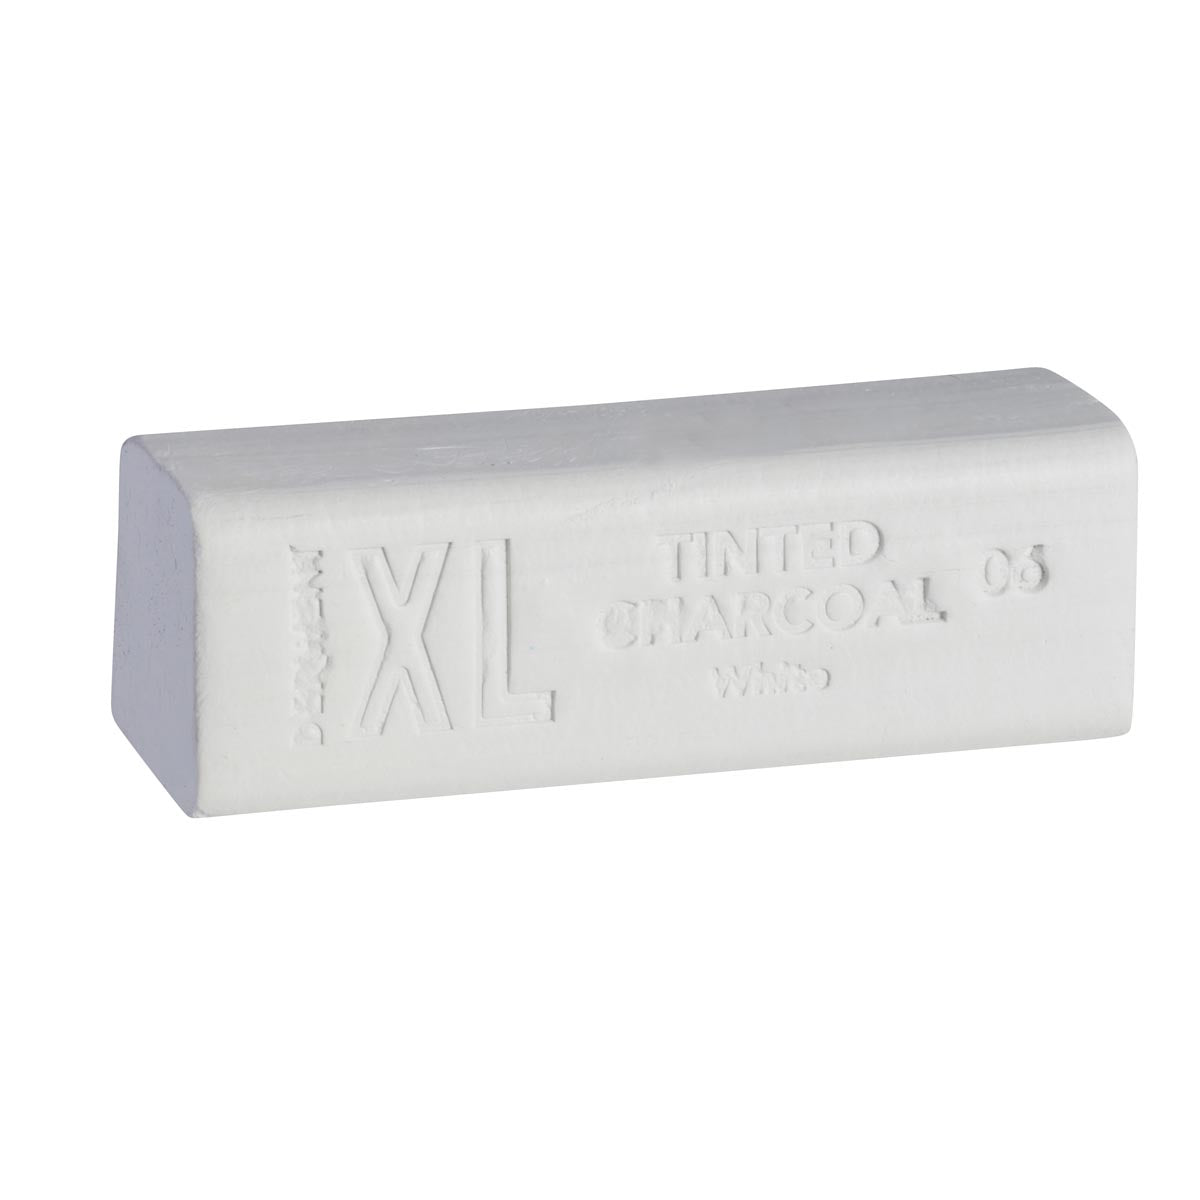 Derwent - Tinted Charcoal XL Block - White